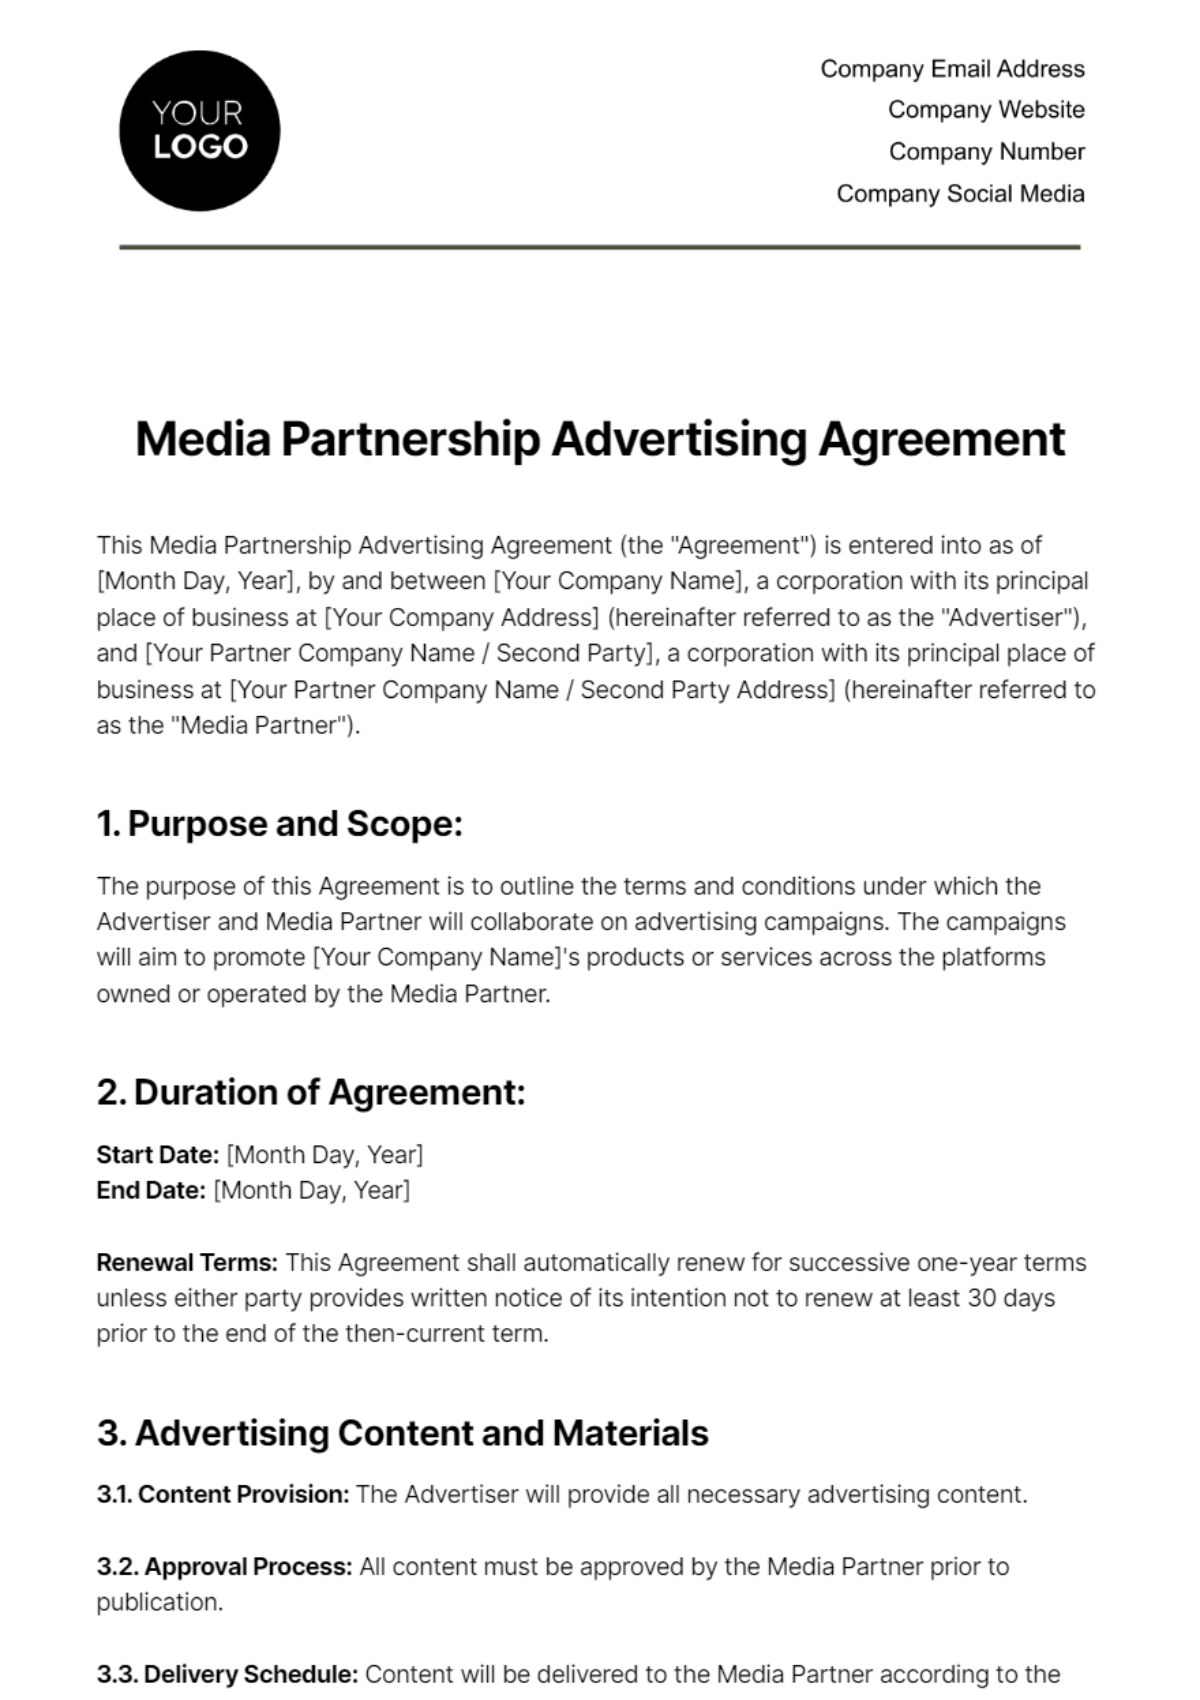 Free Media Partnership Advertising Agreement Template